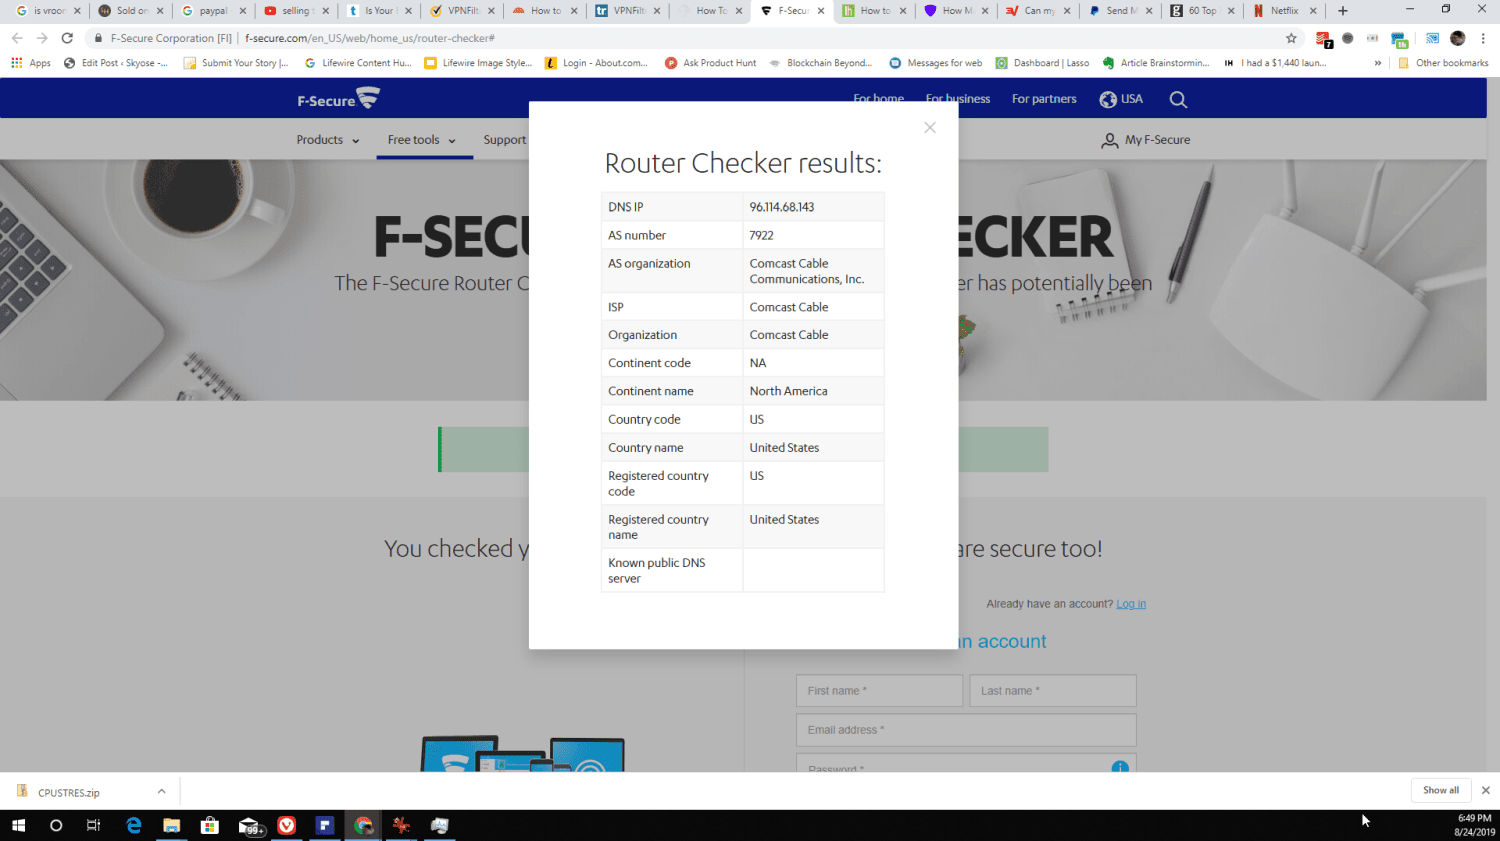 Router scanresultaten van F-Secure